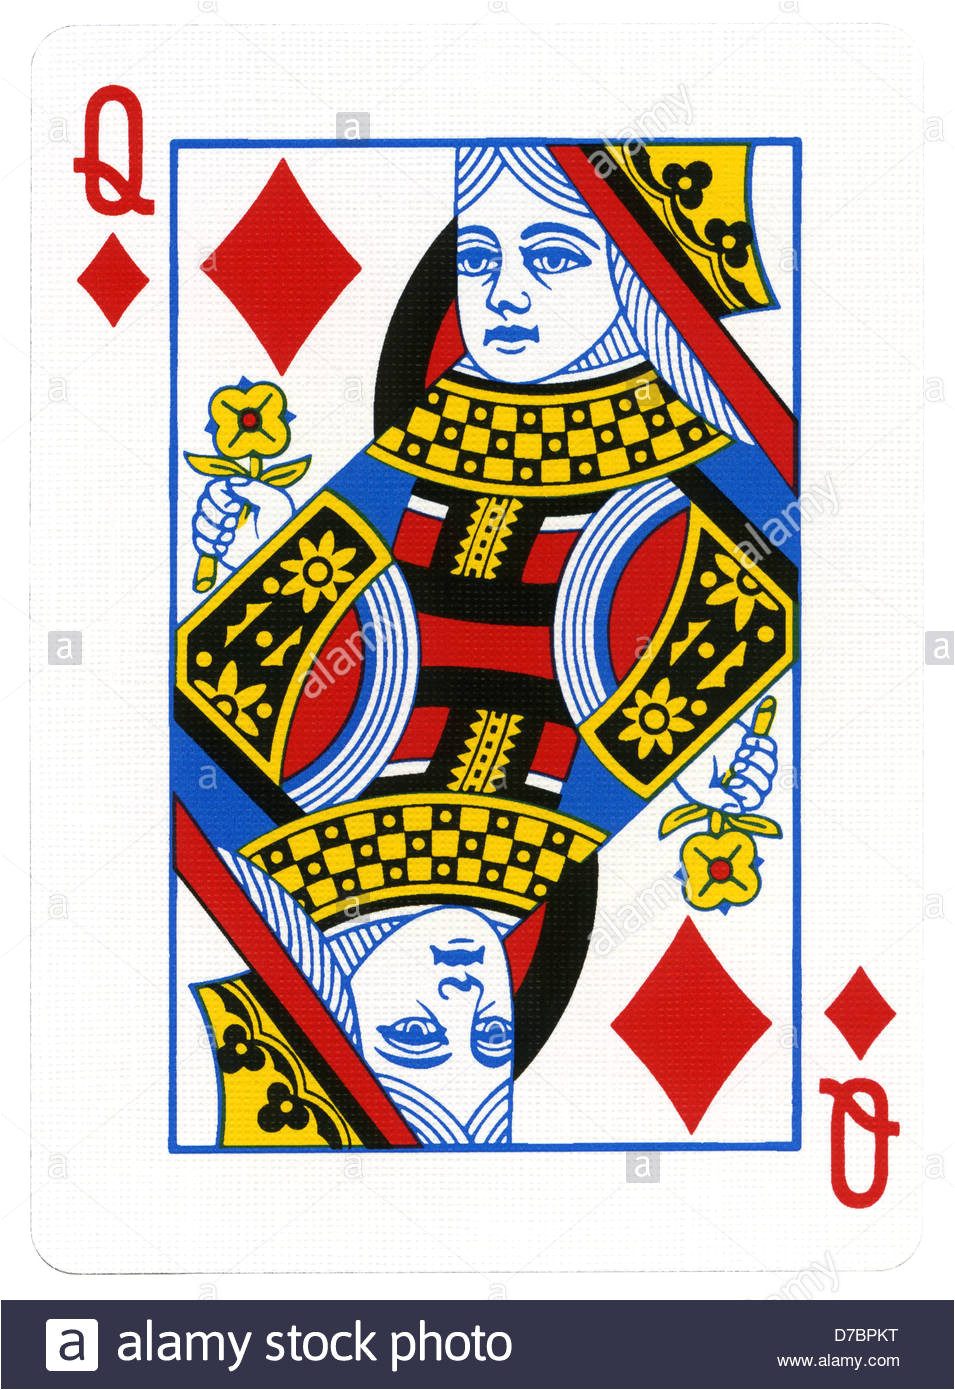 tel aviv israel april 29th 2011 queen diamonds playing card isolated d7bpkt jpg